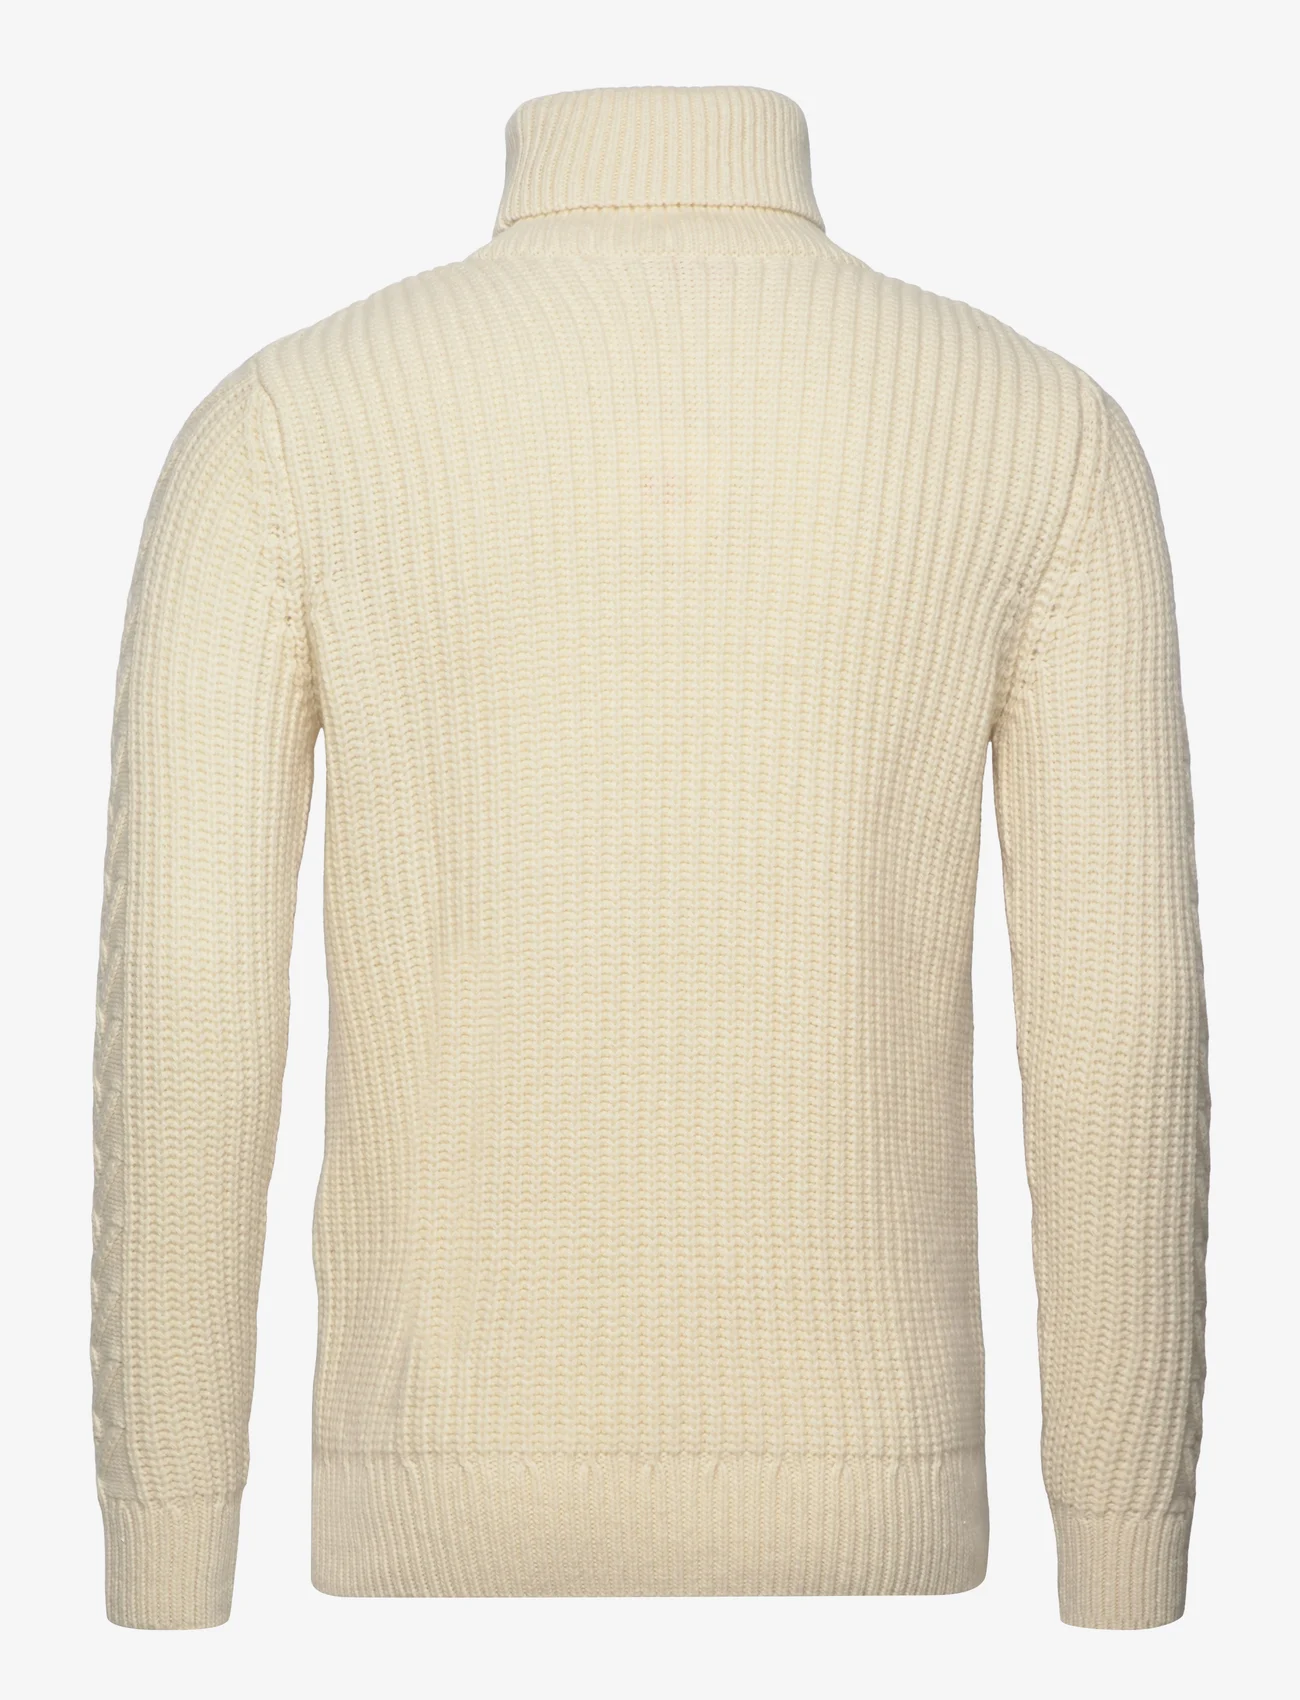 Armor Lux - Turtle neck Sweater Héritage - rollkragen - misty grey - 1